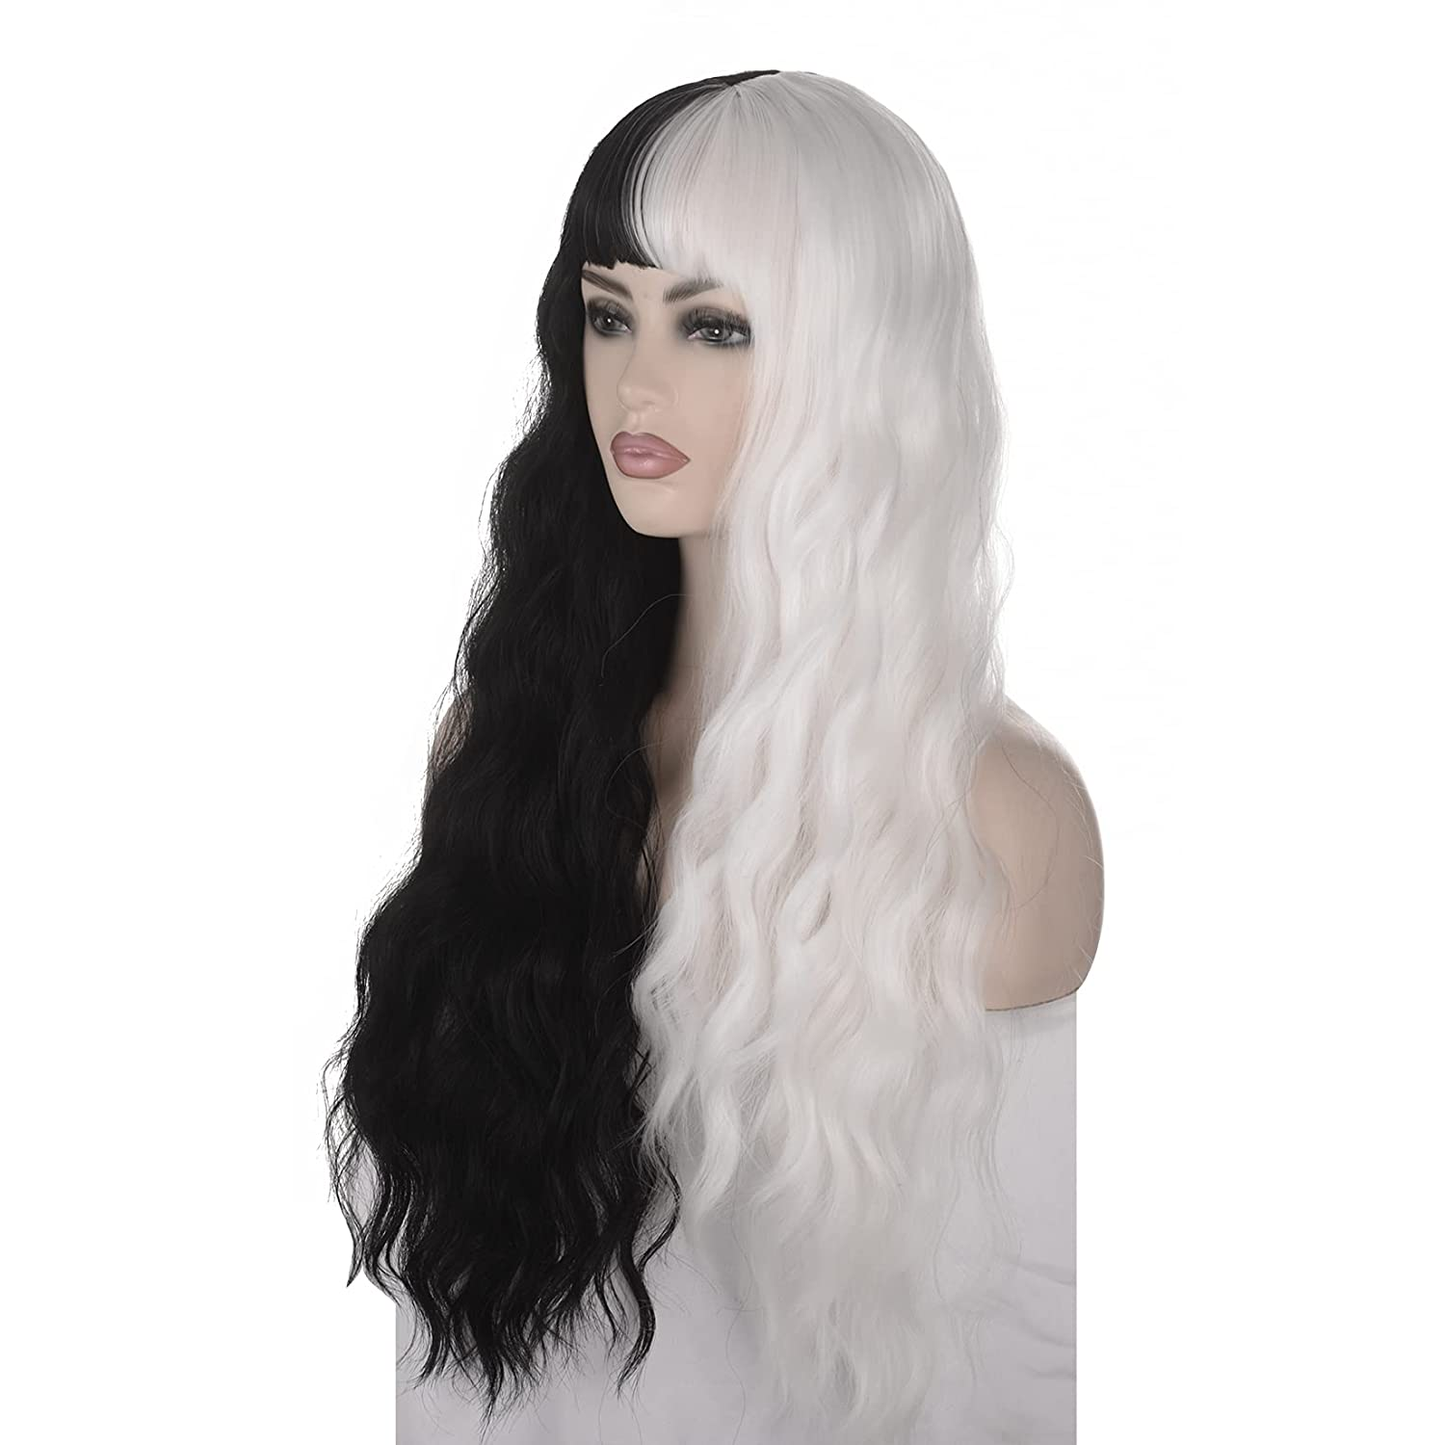 Split Dye White and Black LONG Wavy Full Wig With Bang